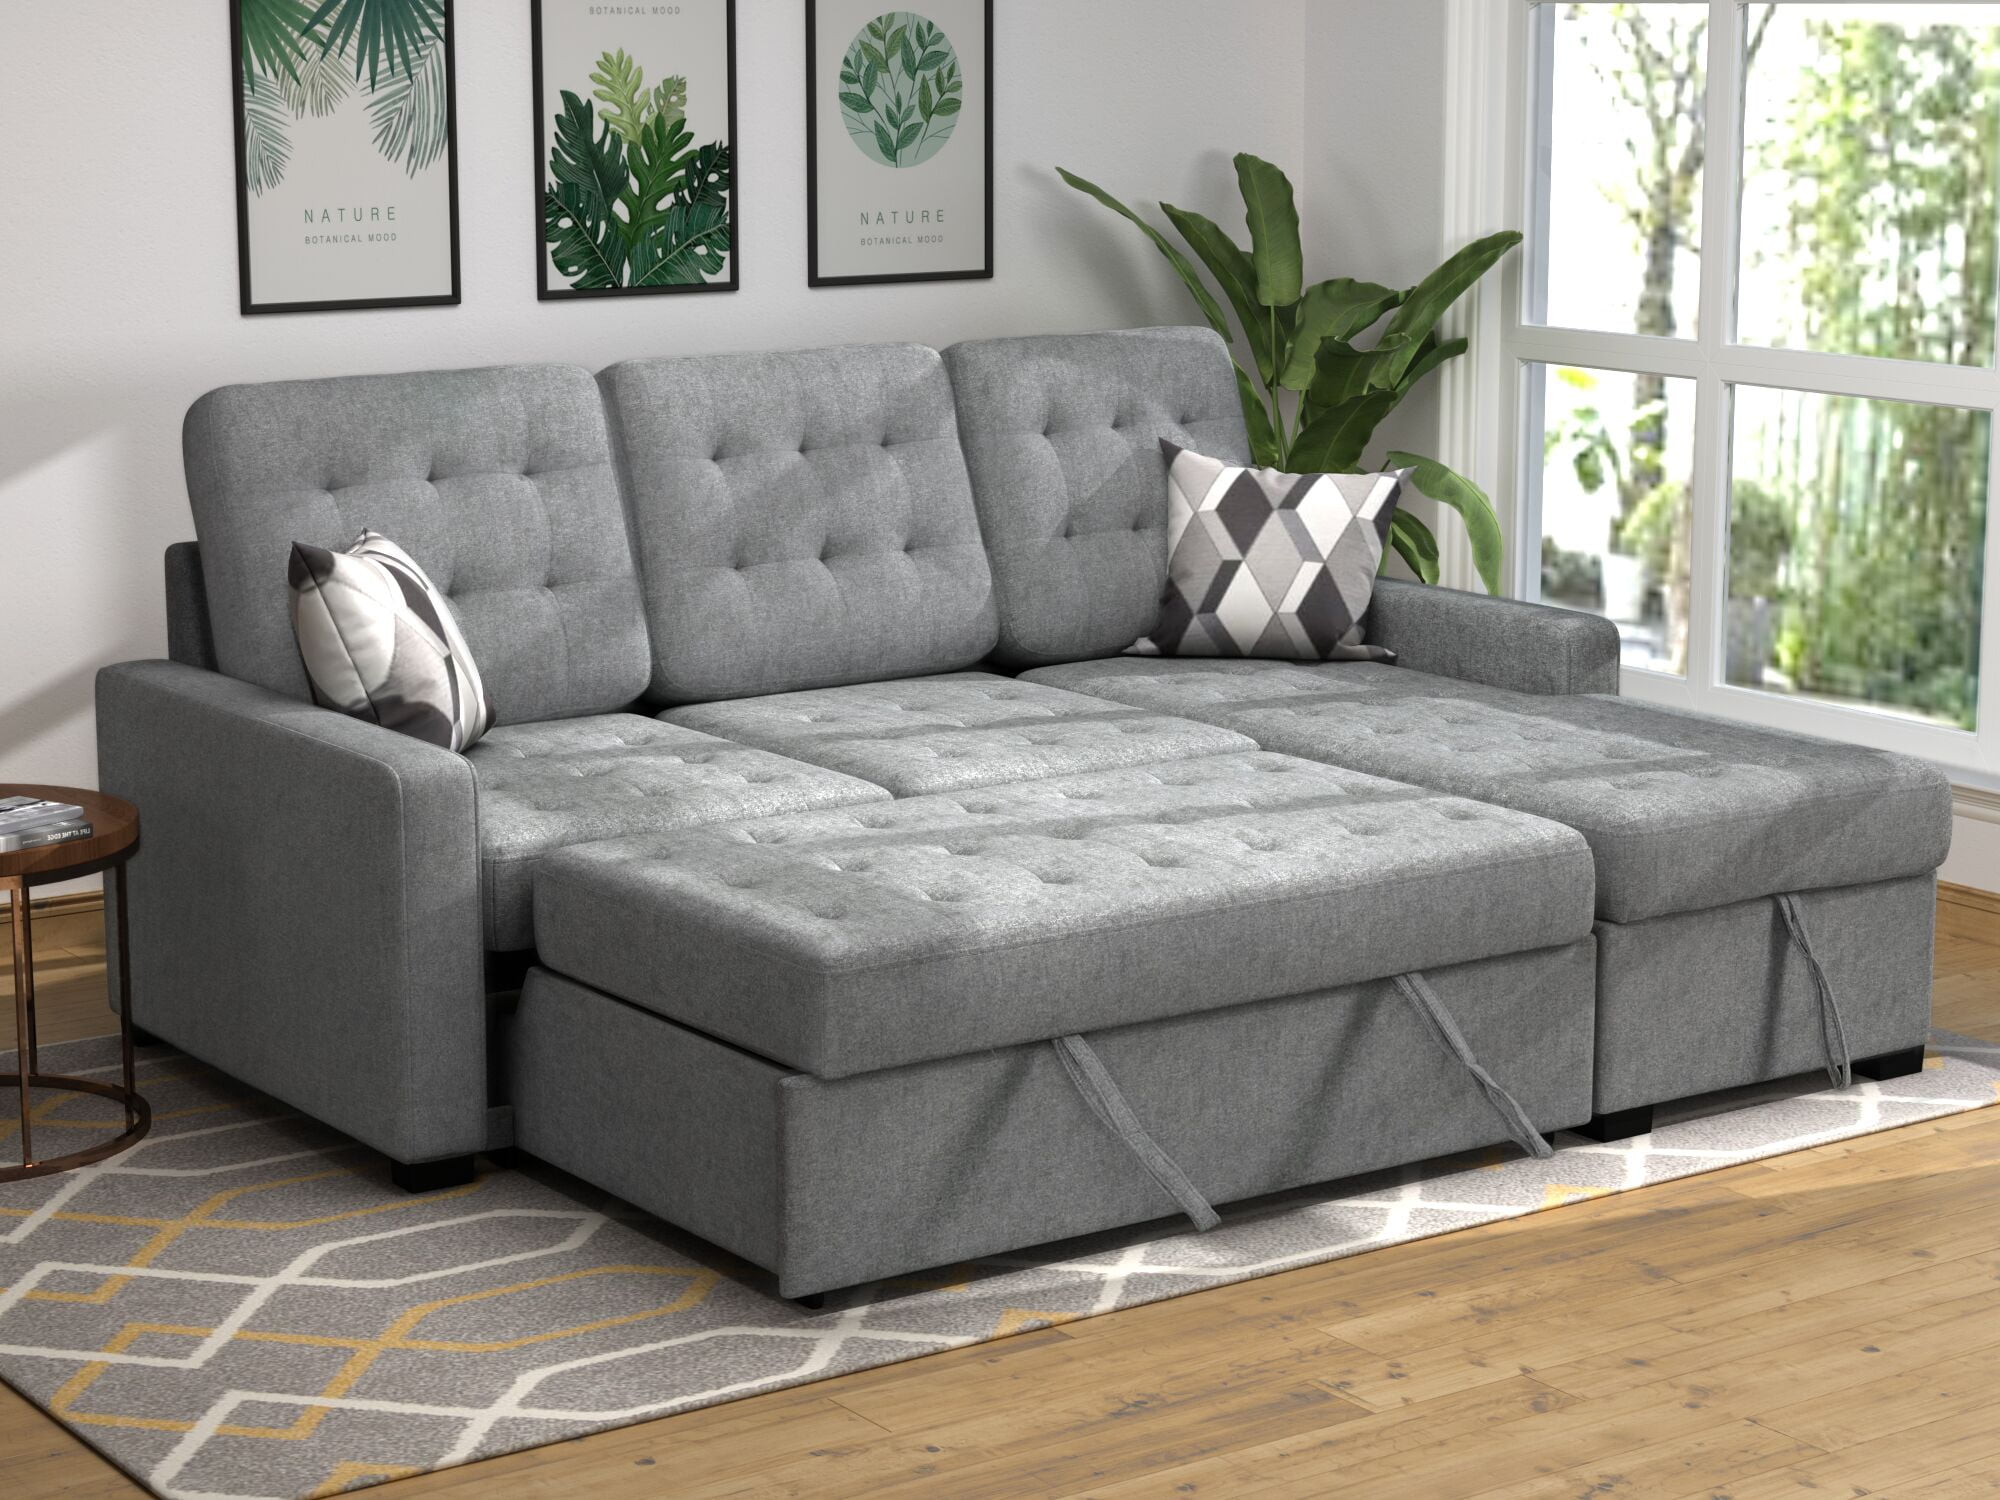 EUROCO Upholstery Sleeper Sectional Sofa Bed, Gray